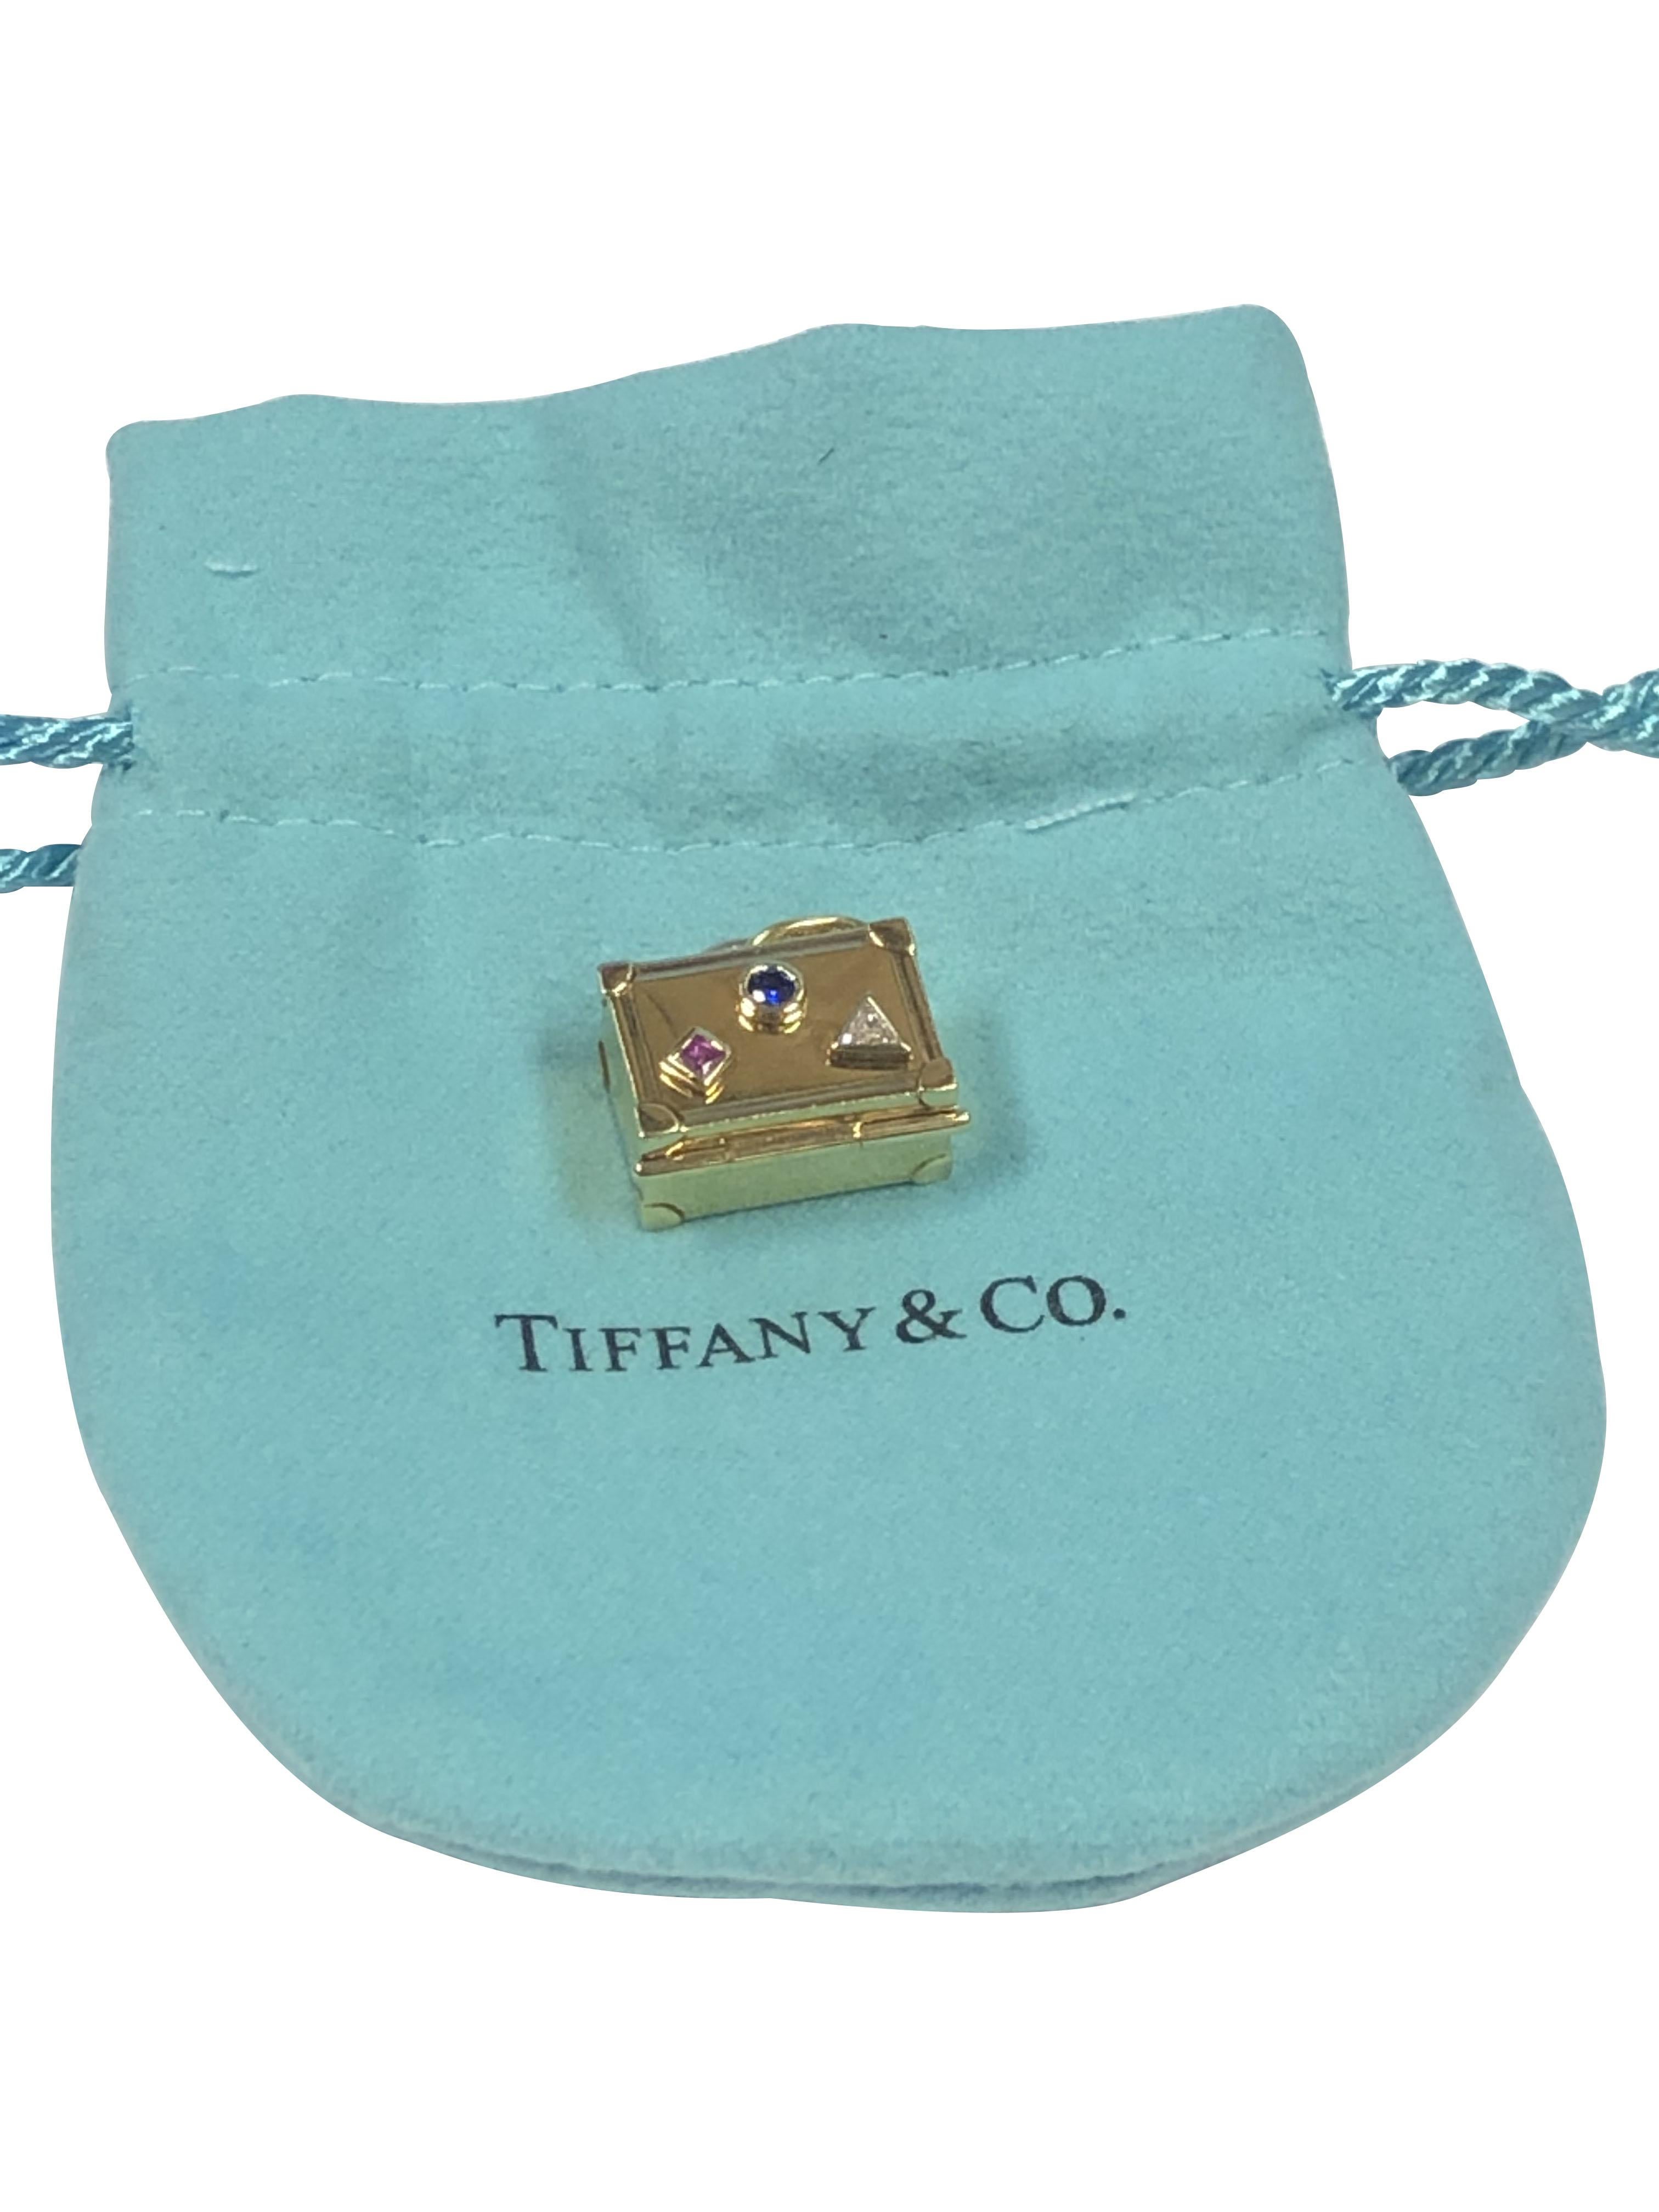 Tiffany & Co. Gold and Gem Set Suitcase Charm Pendant 3